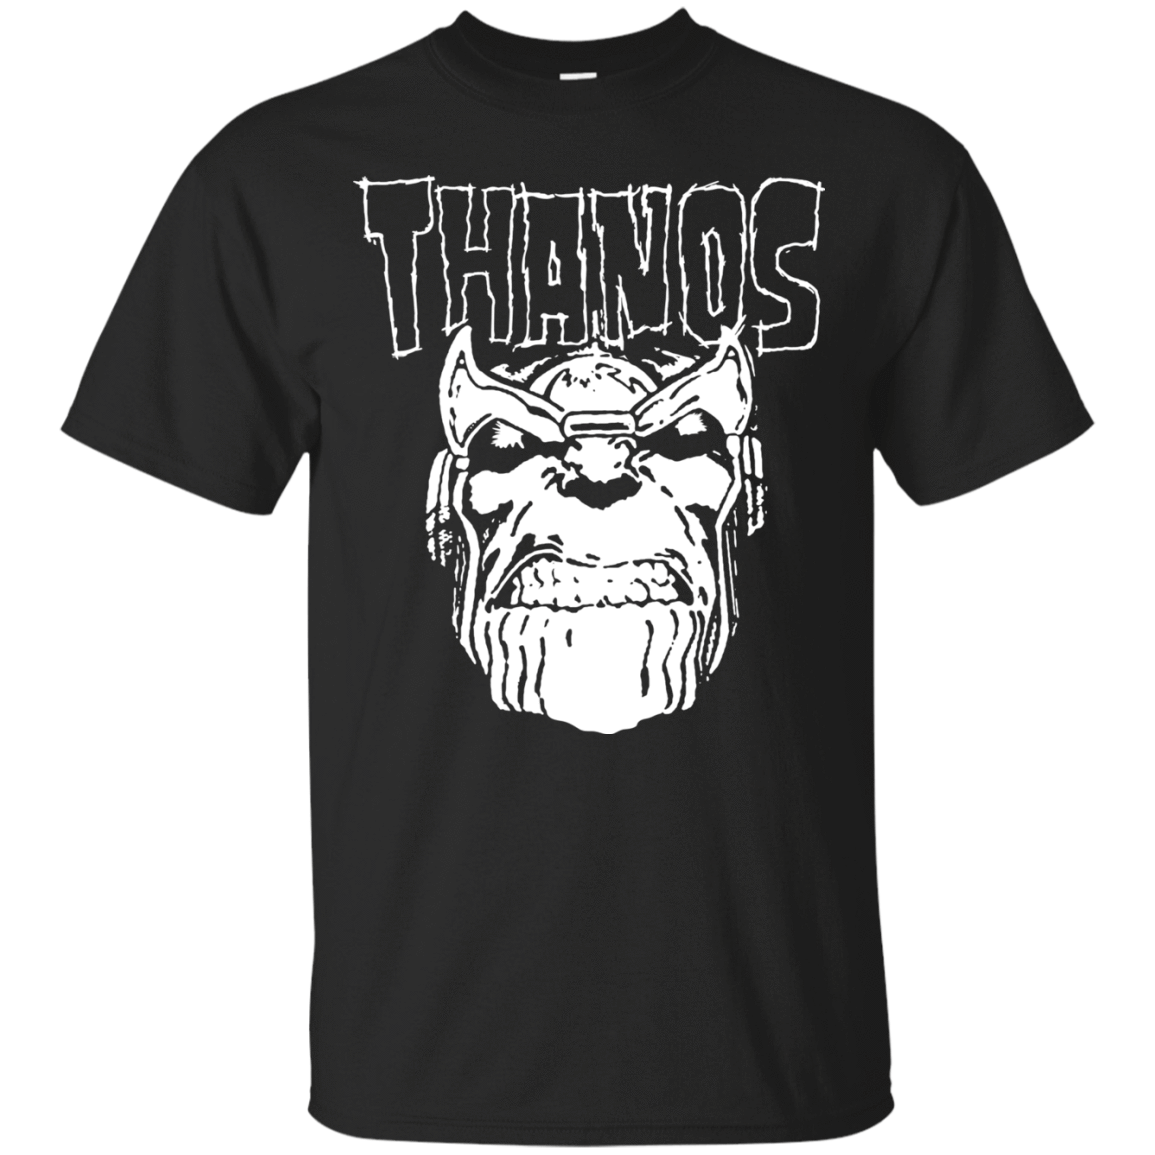 T-Shirts Black / S Thanos Danzig T-Shirt